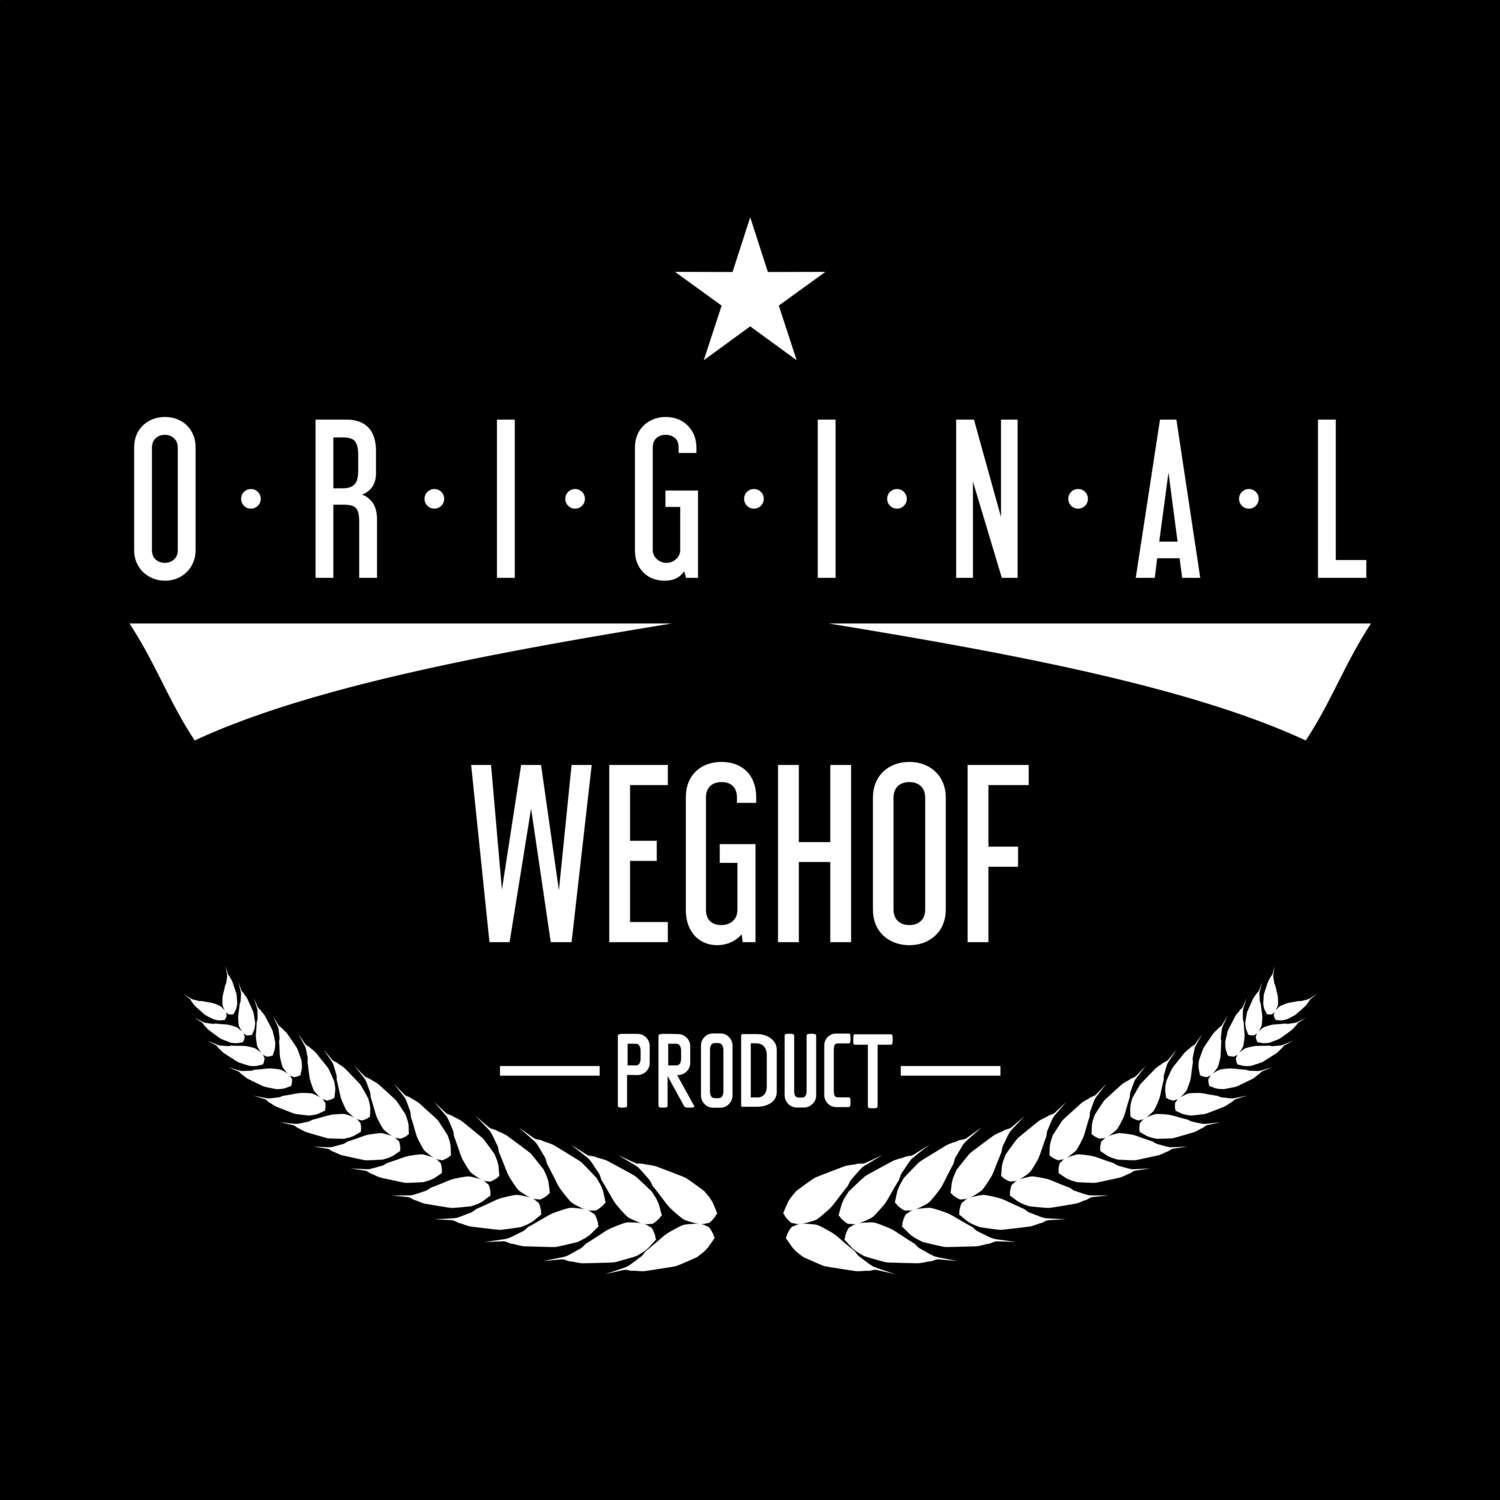 Weghof T-Shirt »Original Product«